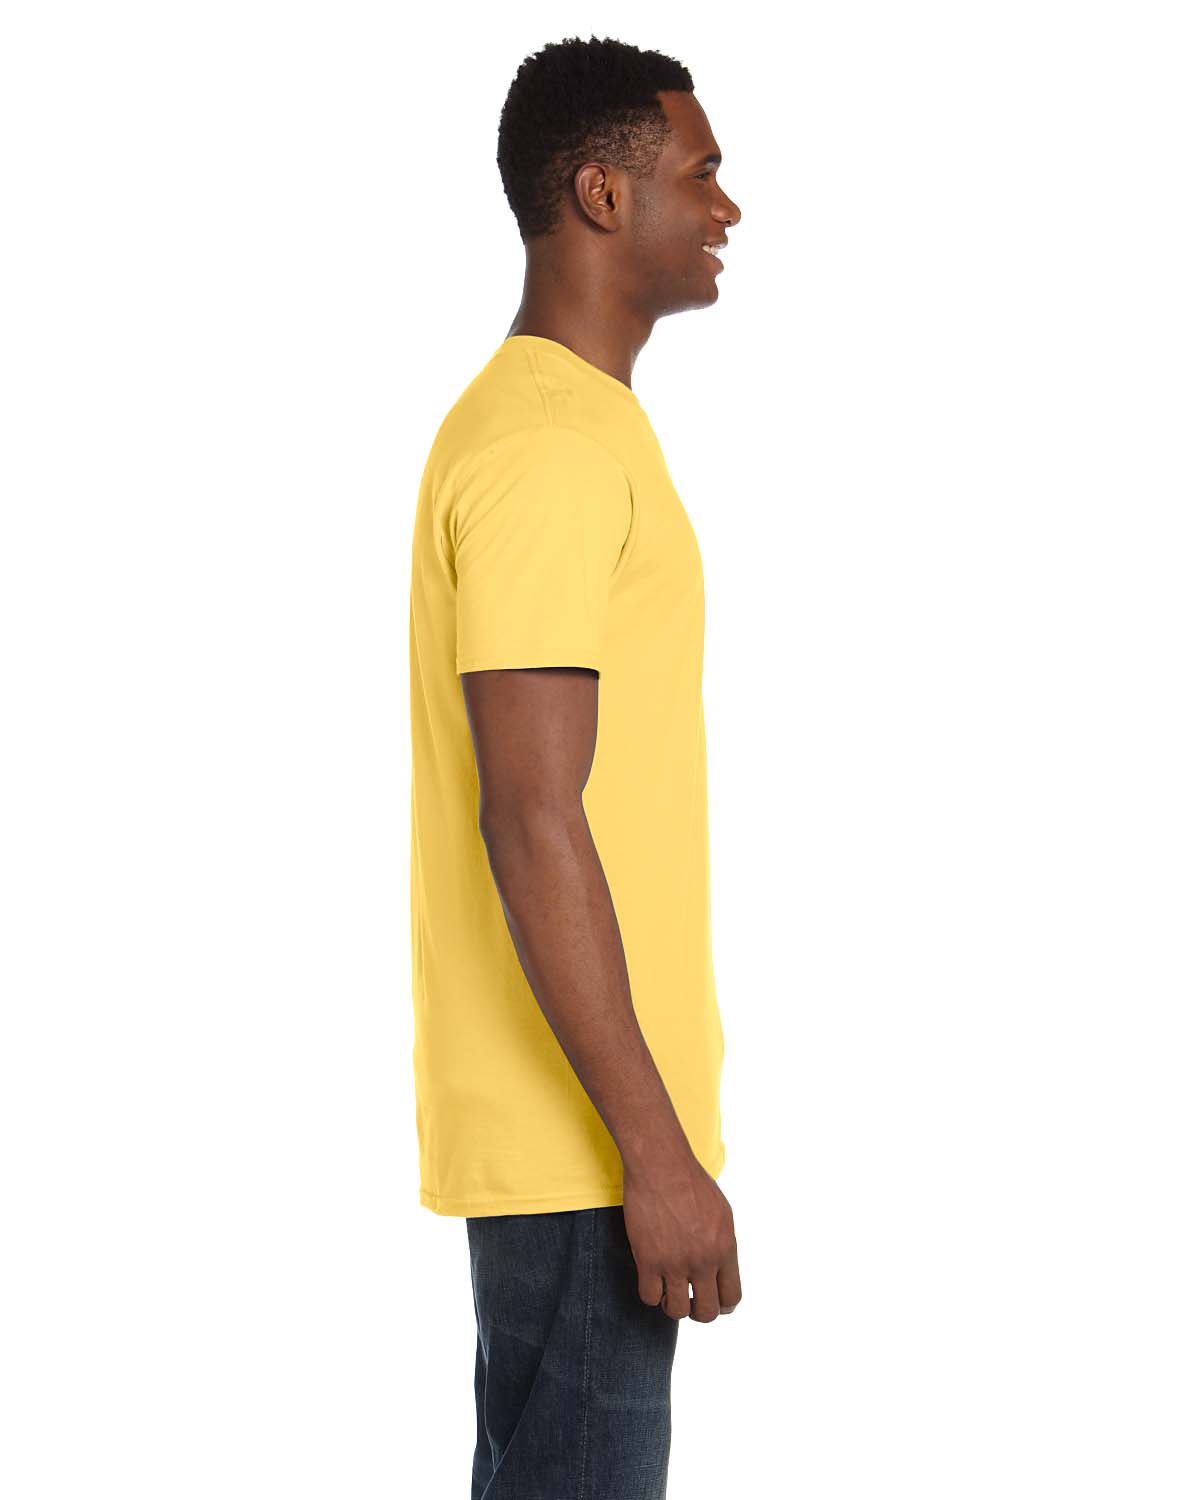 Hanes Mens T-Shirt 100% Ringspun Cotton 4.5 oz Light Weight S-3XL M ...